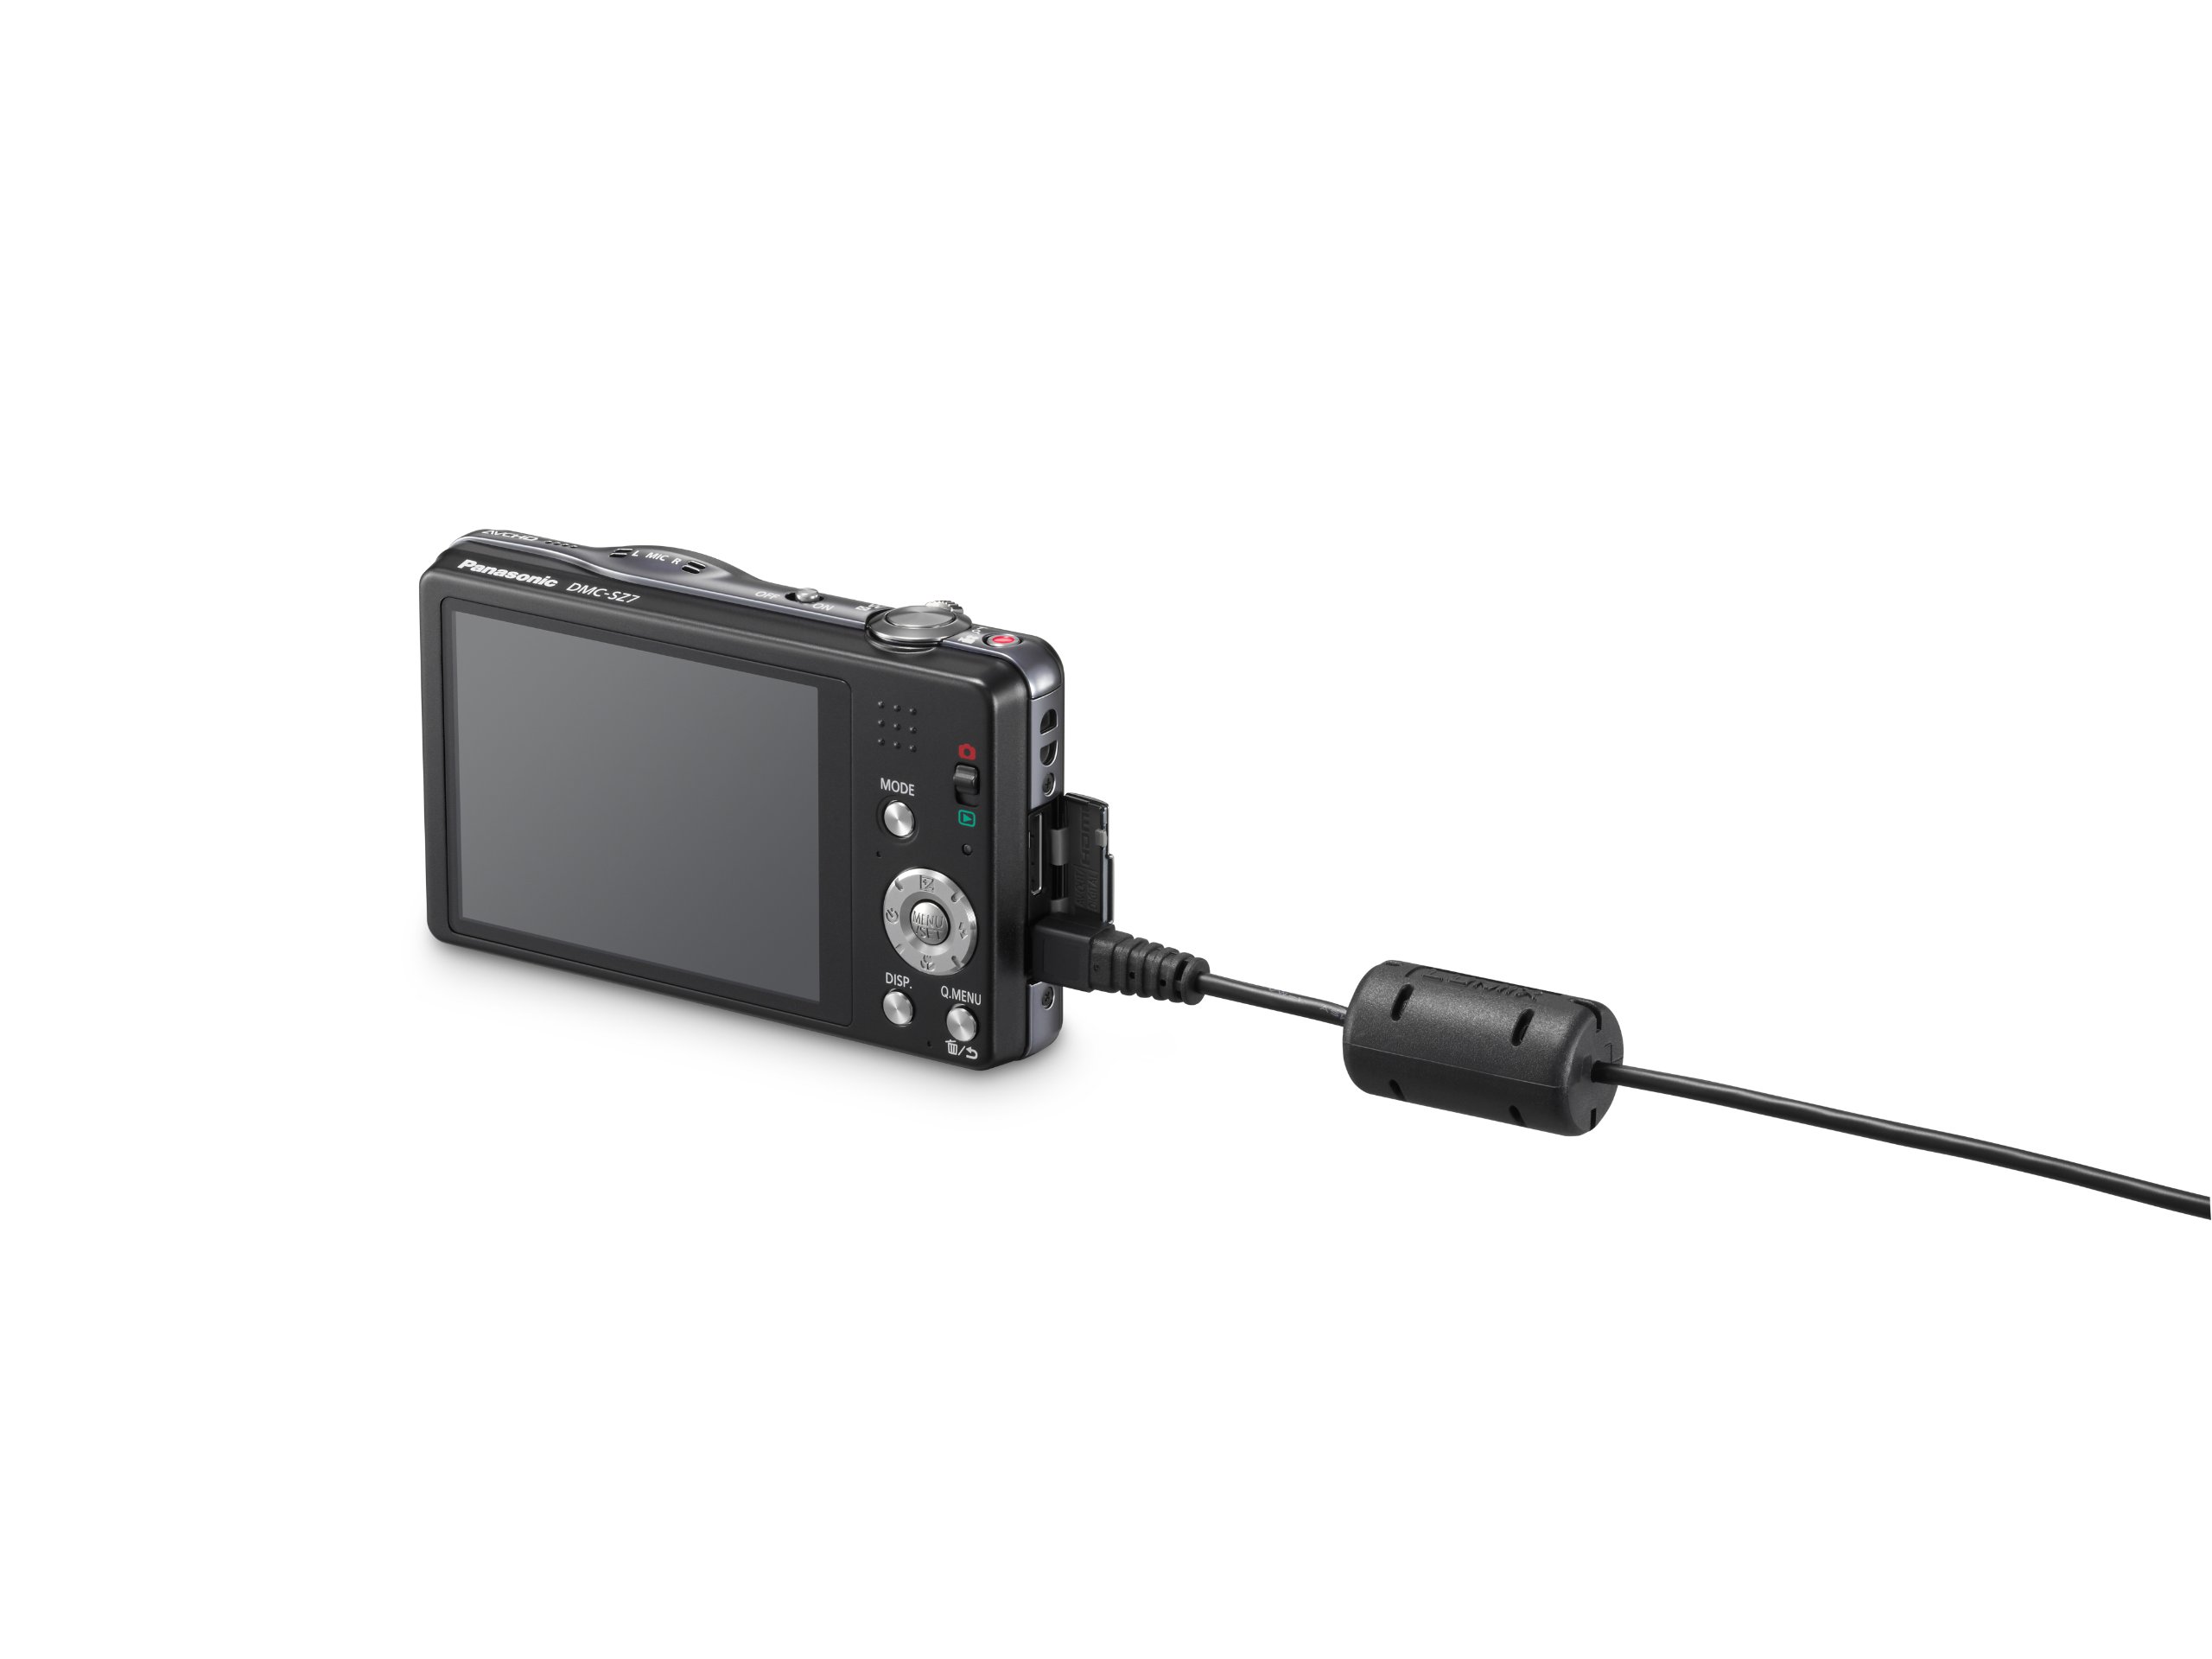 Panasonic Lumix SZ7 14.1 MP High Sensitivity MOS Digital Camera with 10x Optical Zoom (Black)